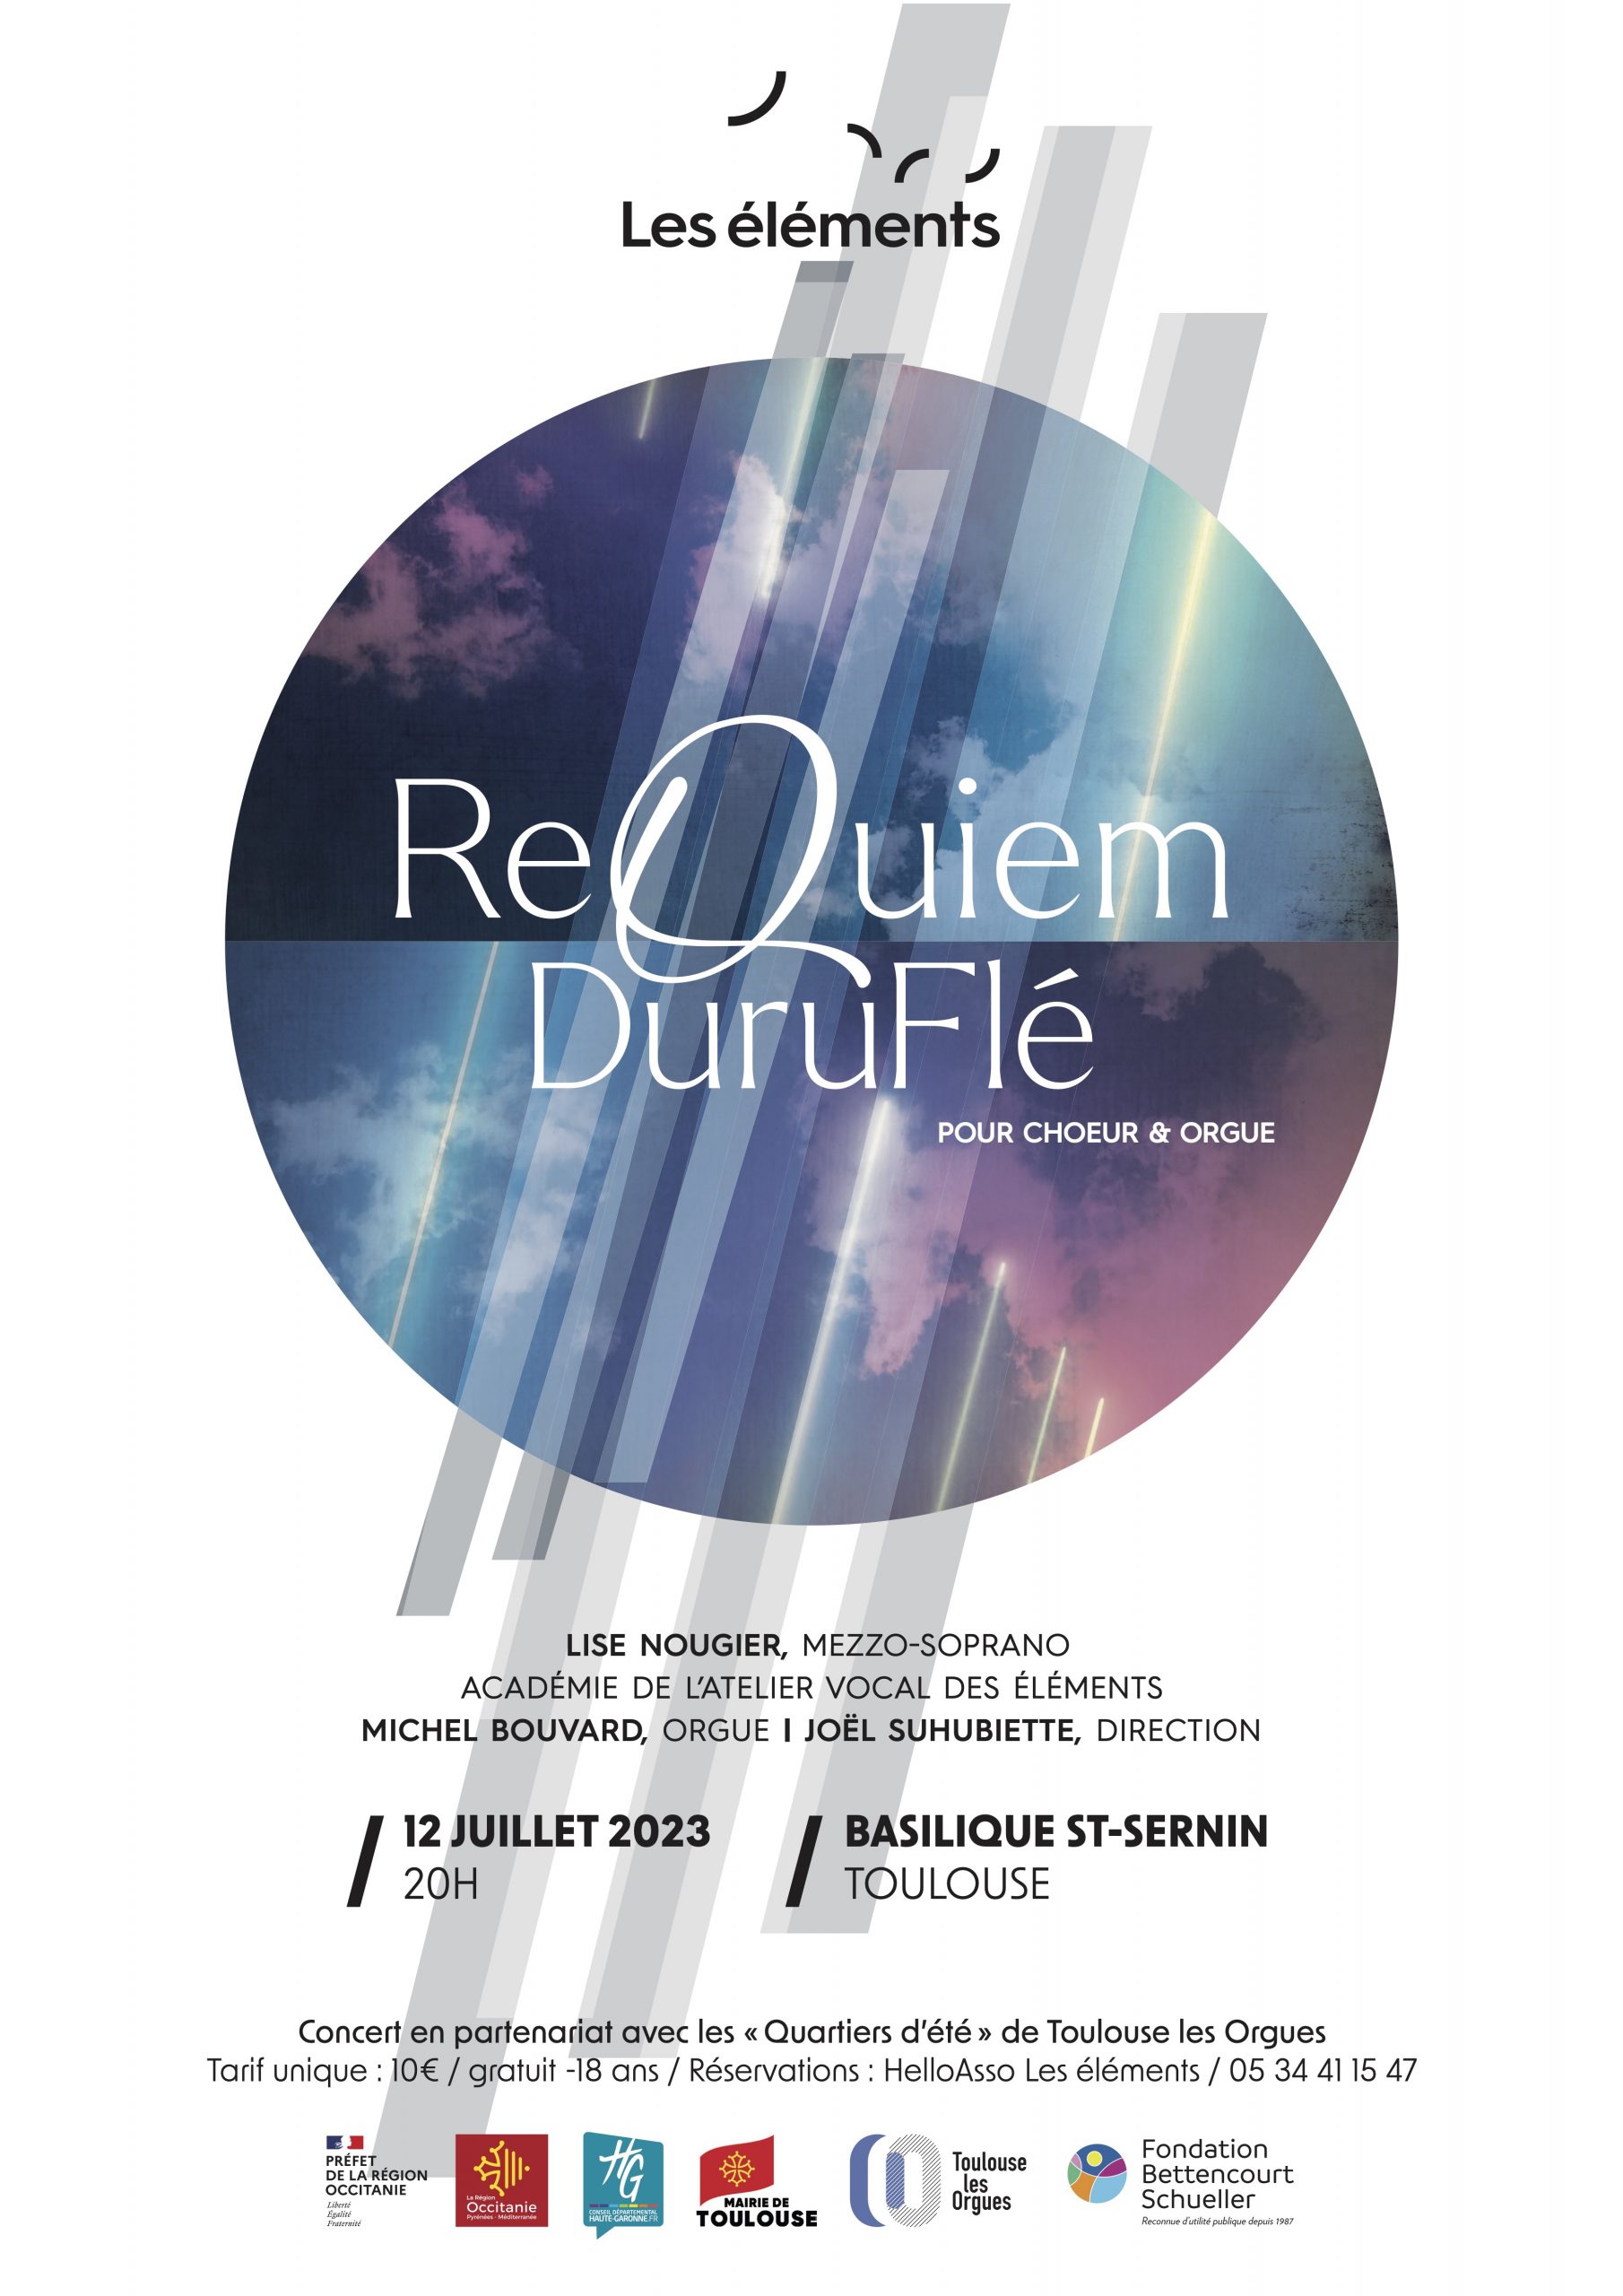 Les Éléments Requiem Duruflé